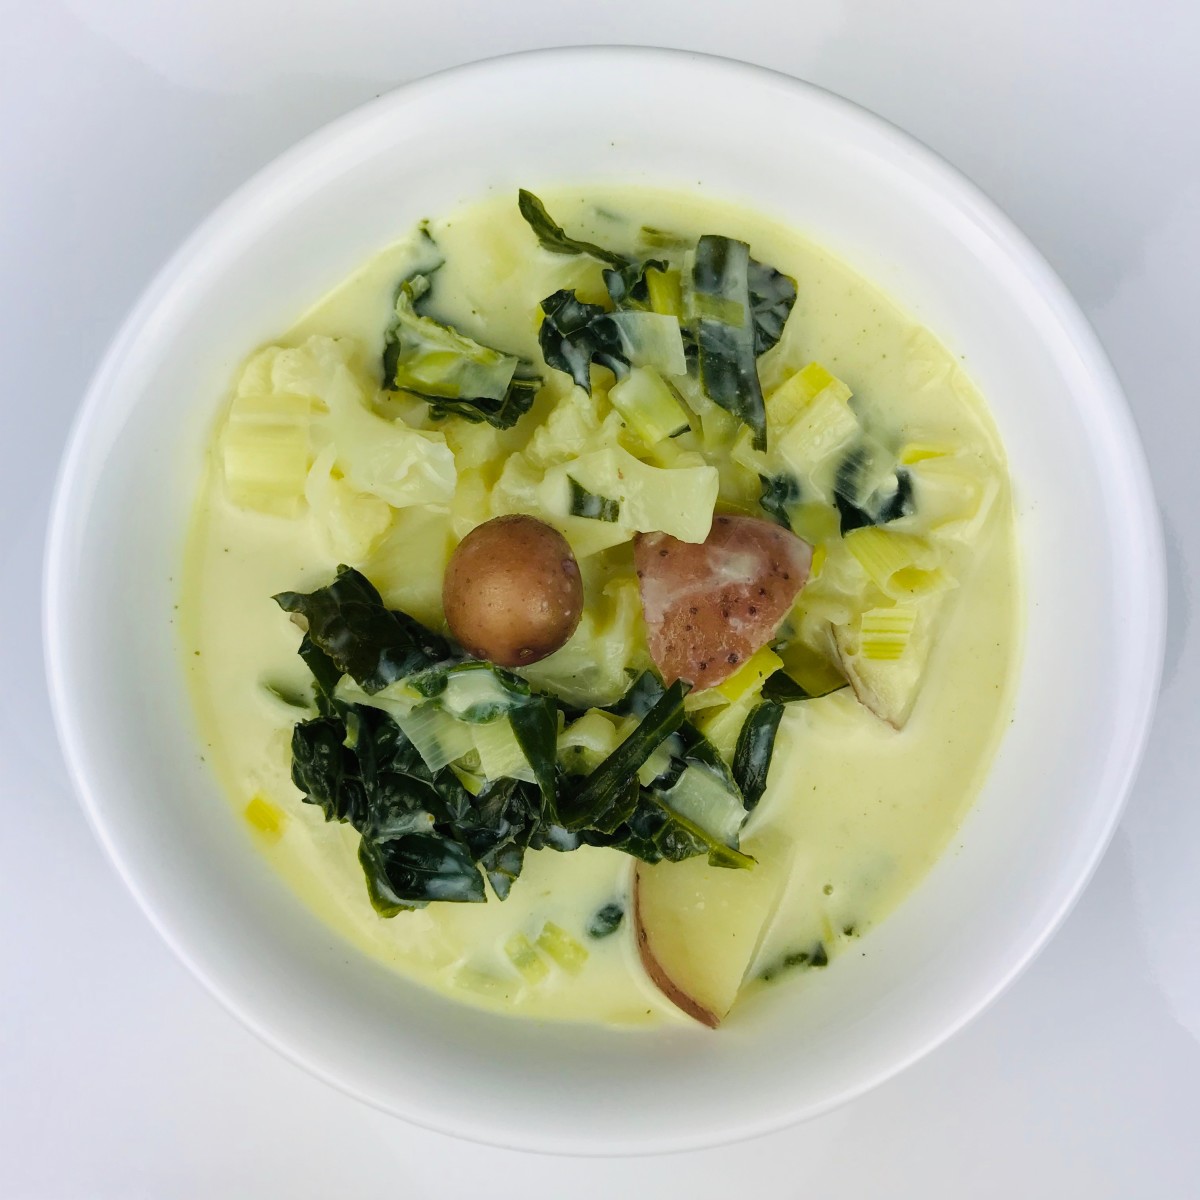 Leek and potato soup with kale and cauliflower.